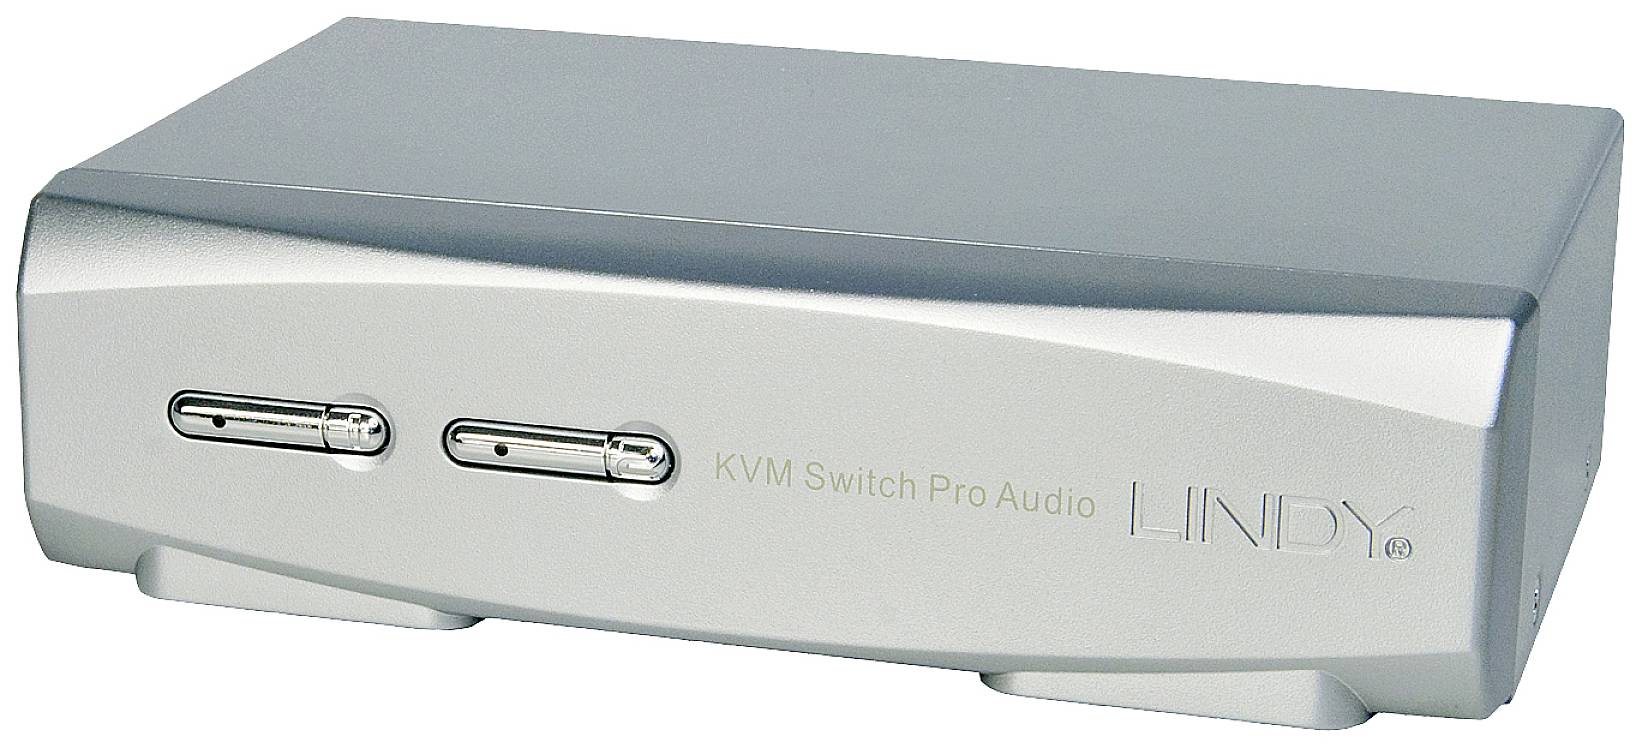 LINDY KVM Switch 2 Port Displayport 1.2 USB 2.0  Audio Switch Pro